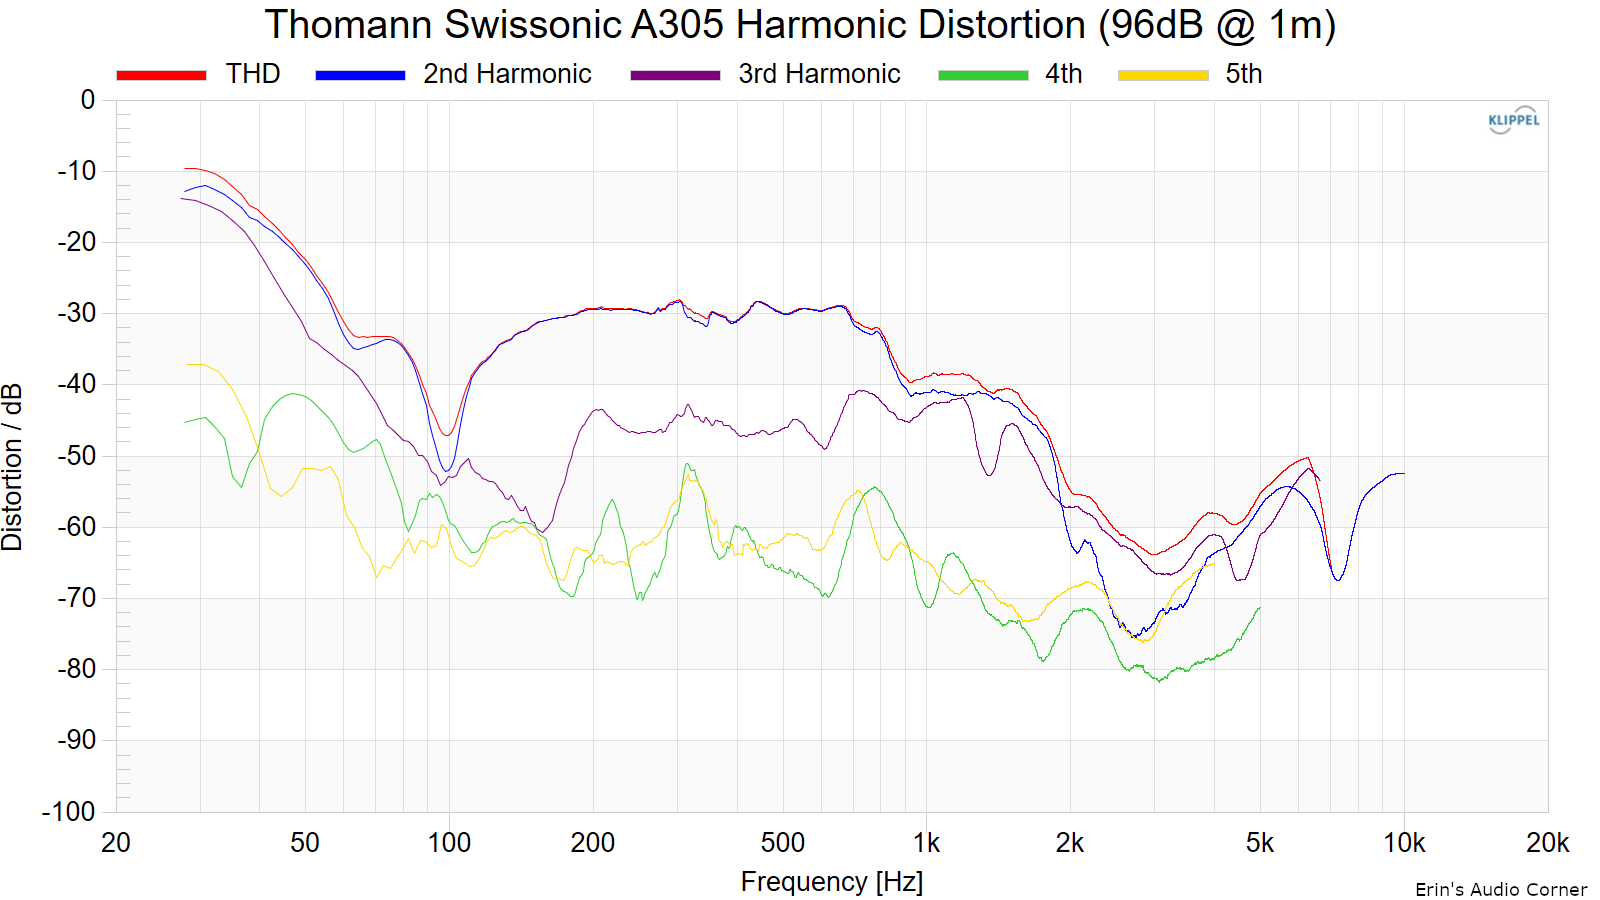 Thomann-Swissonic-A305-Harmonic-Distortion-96dB-1m.png